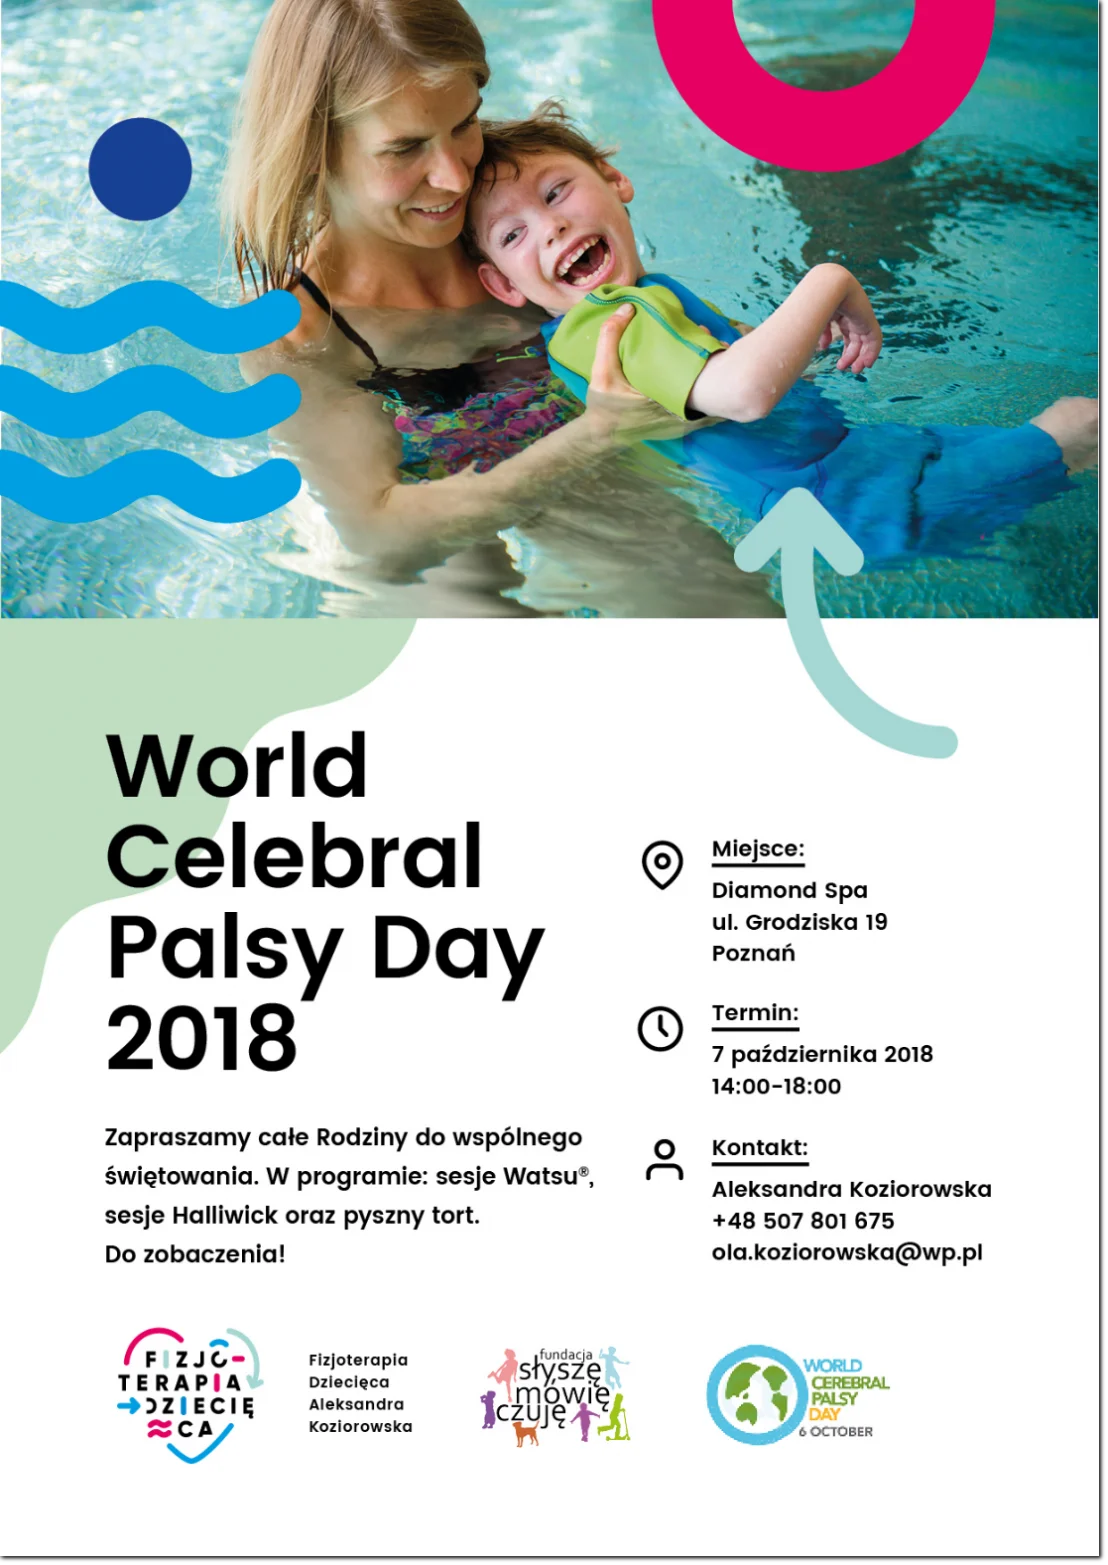 World Cerebral Palsy Day 2018